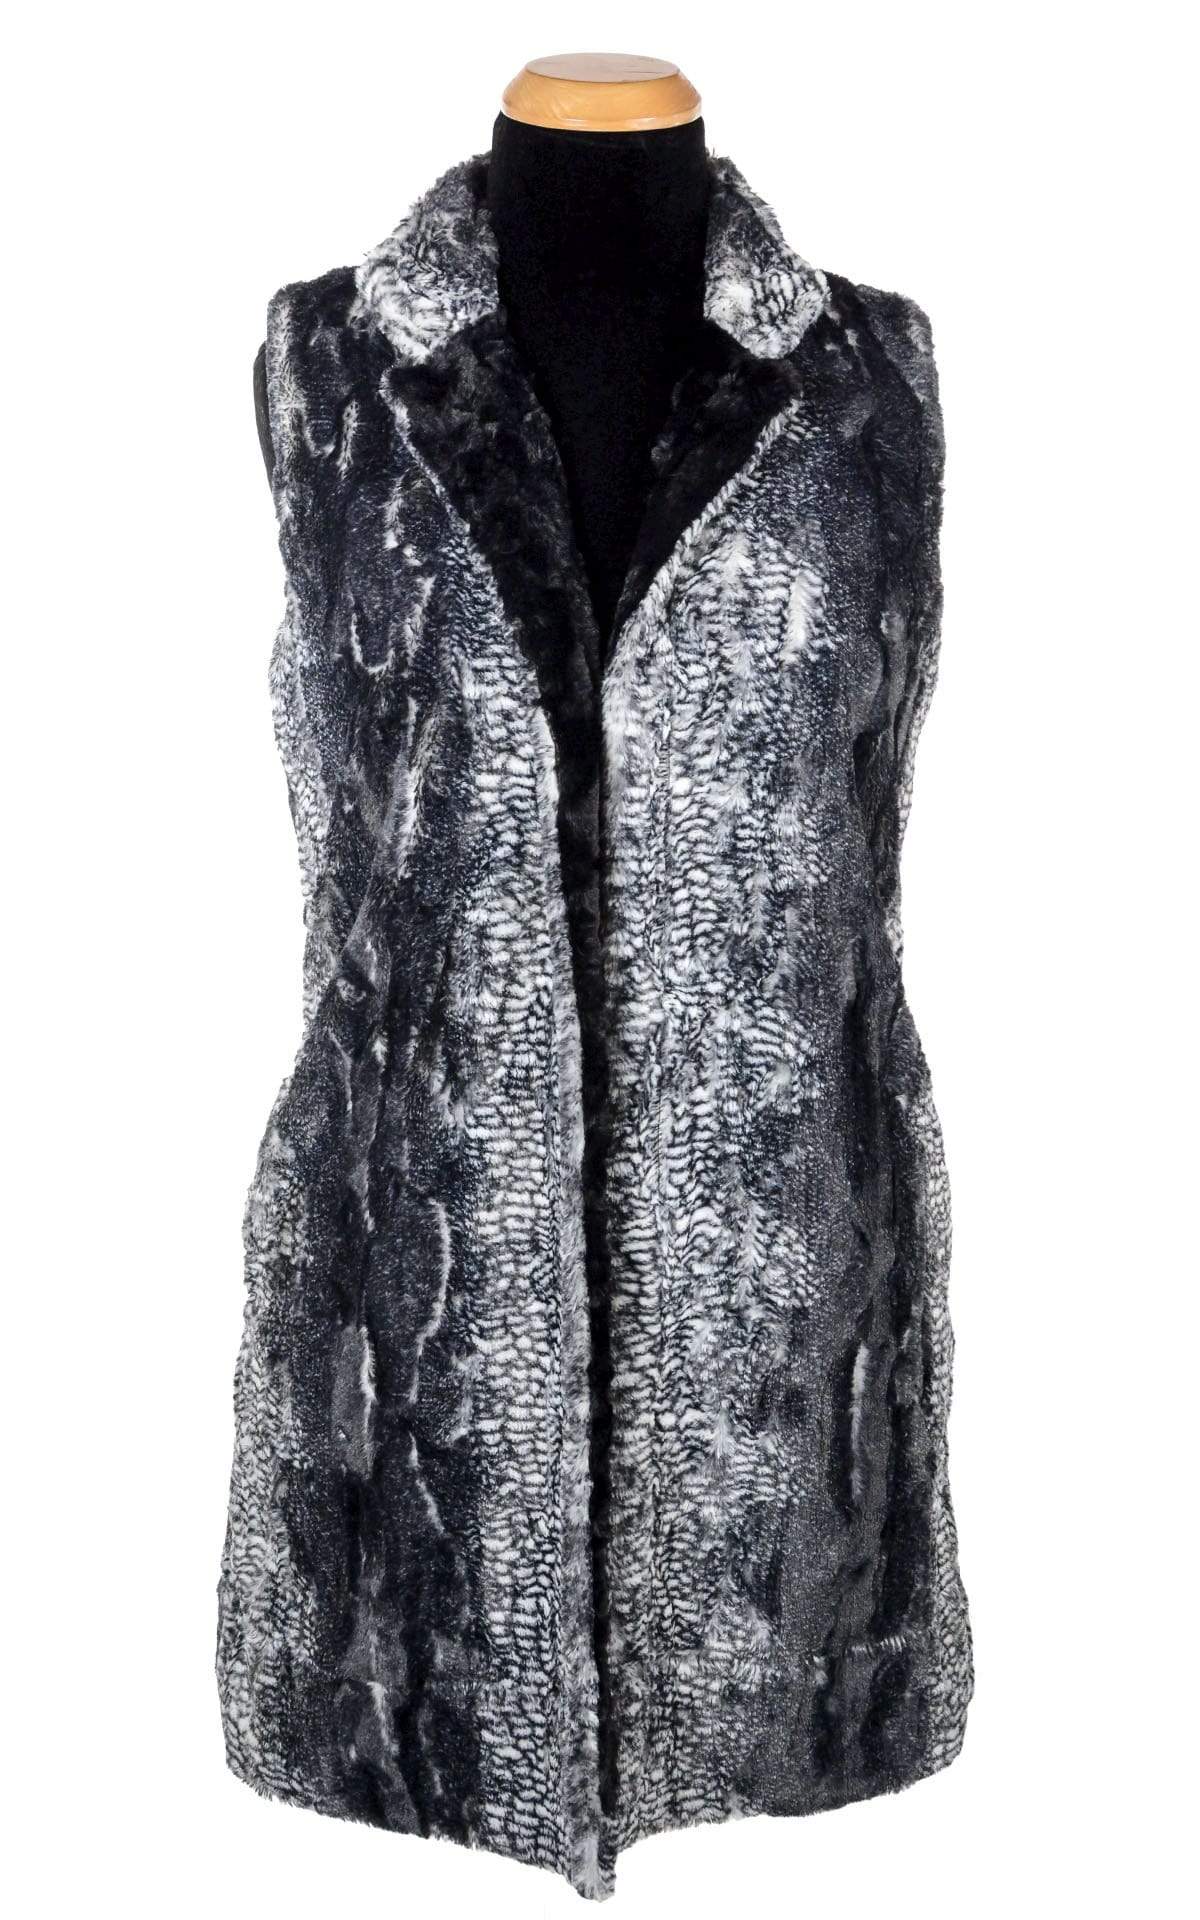 Mandarin Vest | Luxury Faux Fur in Black Mamba | Handmade by Pandemonium Seattle USA